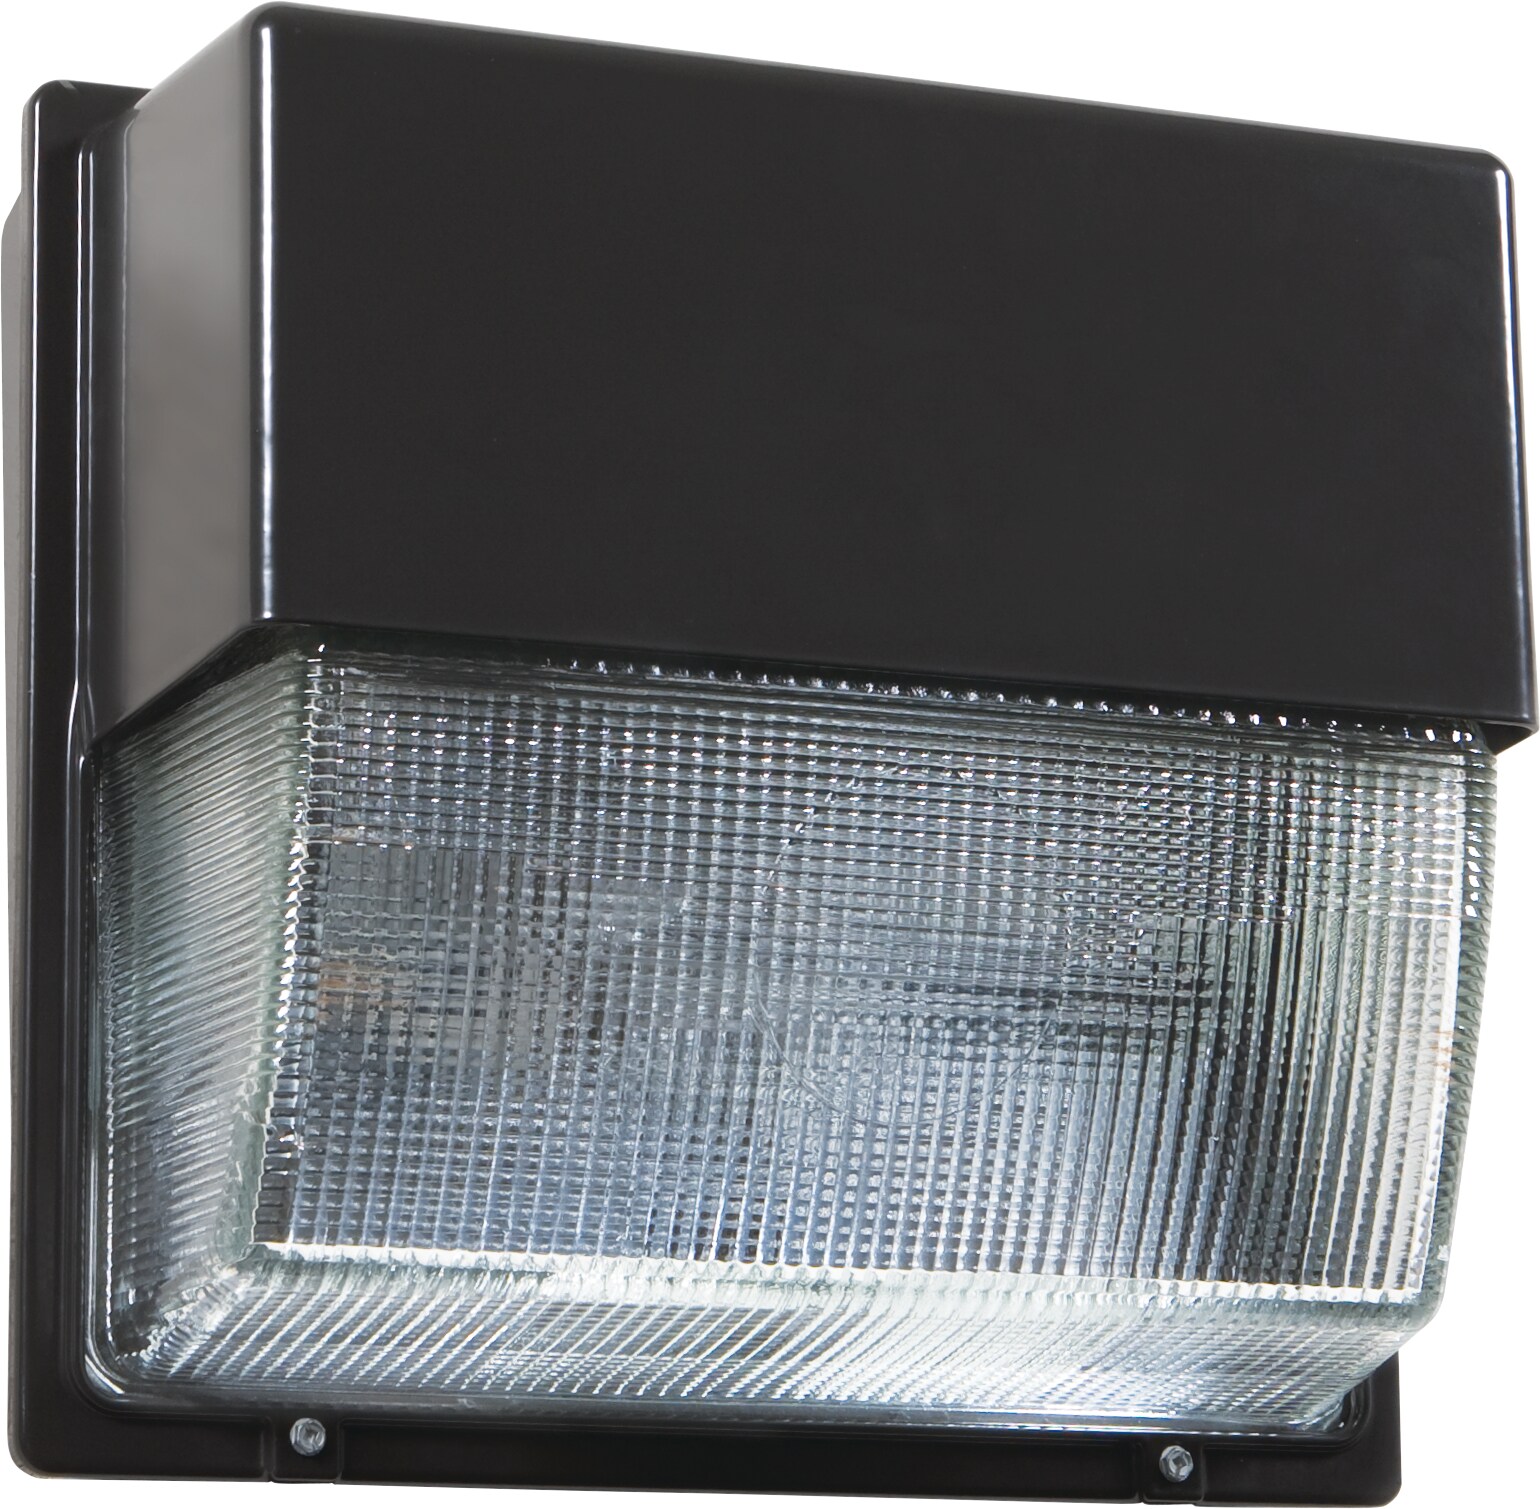 Lithonia Lighting Dark Bronze 40-Watt Outdoor Low-Profile LED Wall Pack Light 